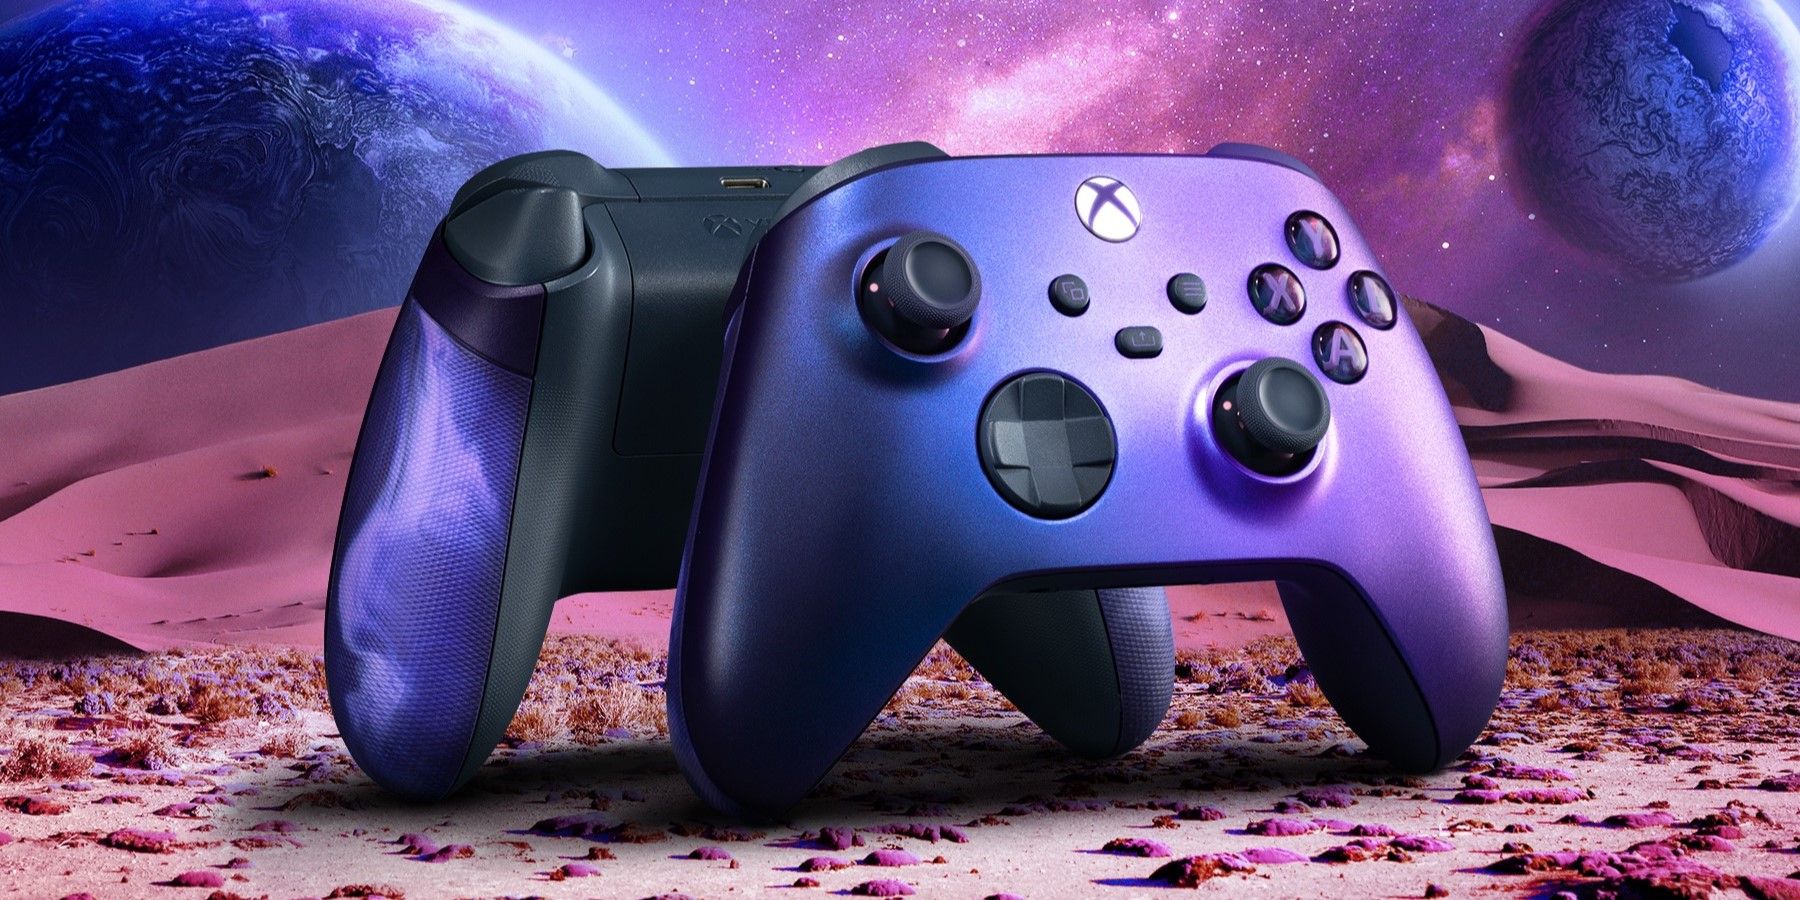 xbox-wireless-controller-stellar-shift-2023-space-purple